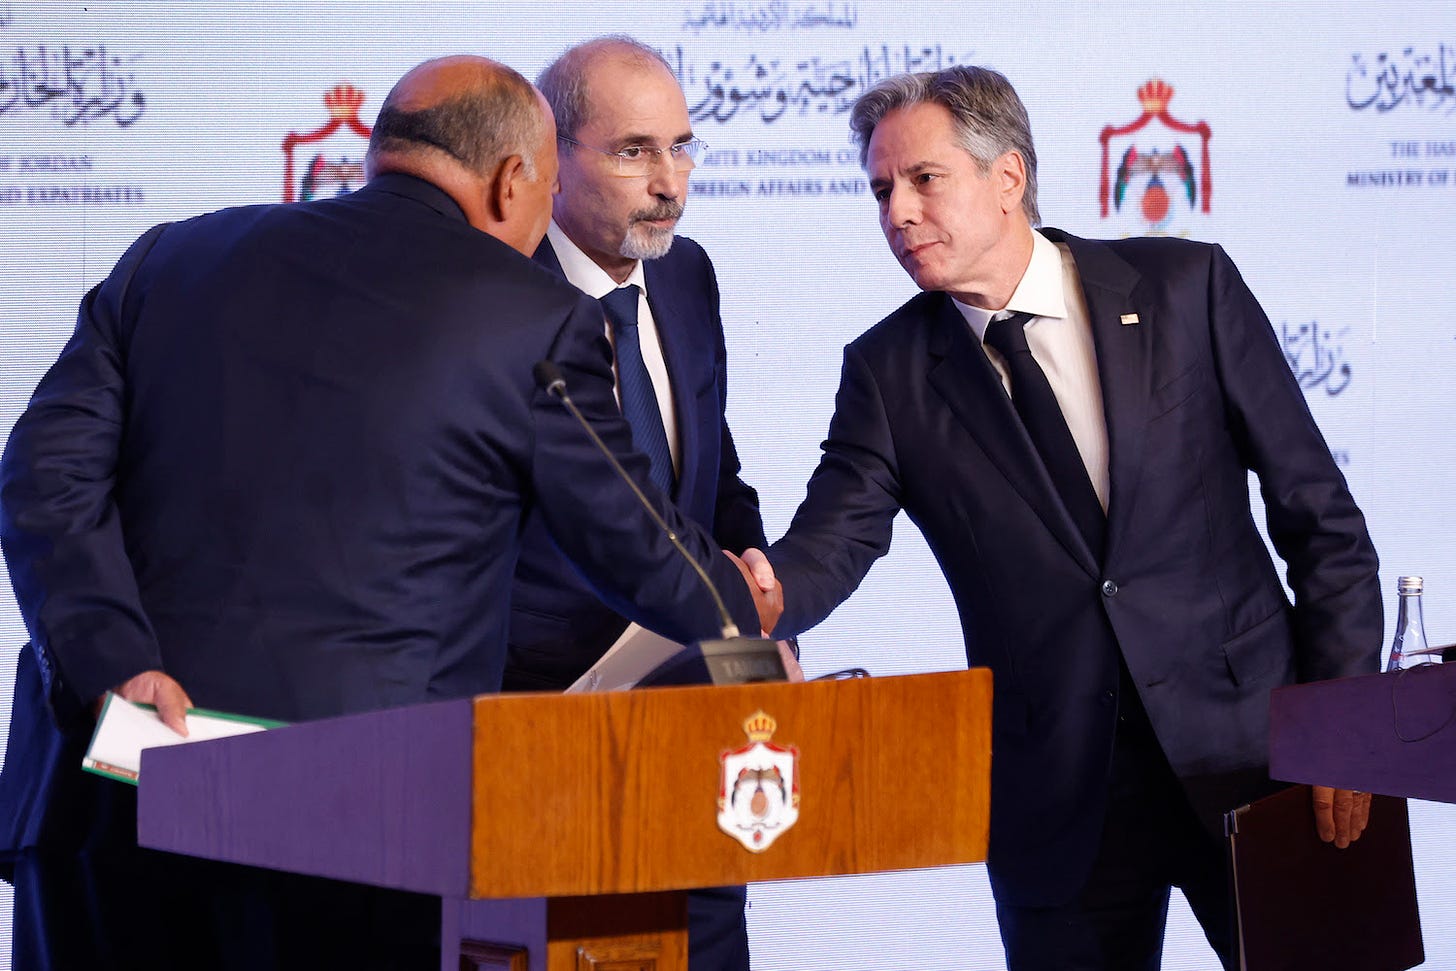 U.S. Secretary of State Antony Blinken, Jordanian Foreign Minister Ayman Safadi, and Egyptian Foreign Minister Sameh Shoukry shake hands.